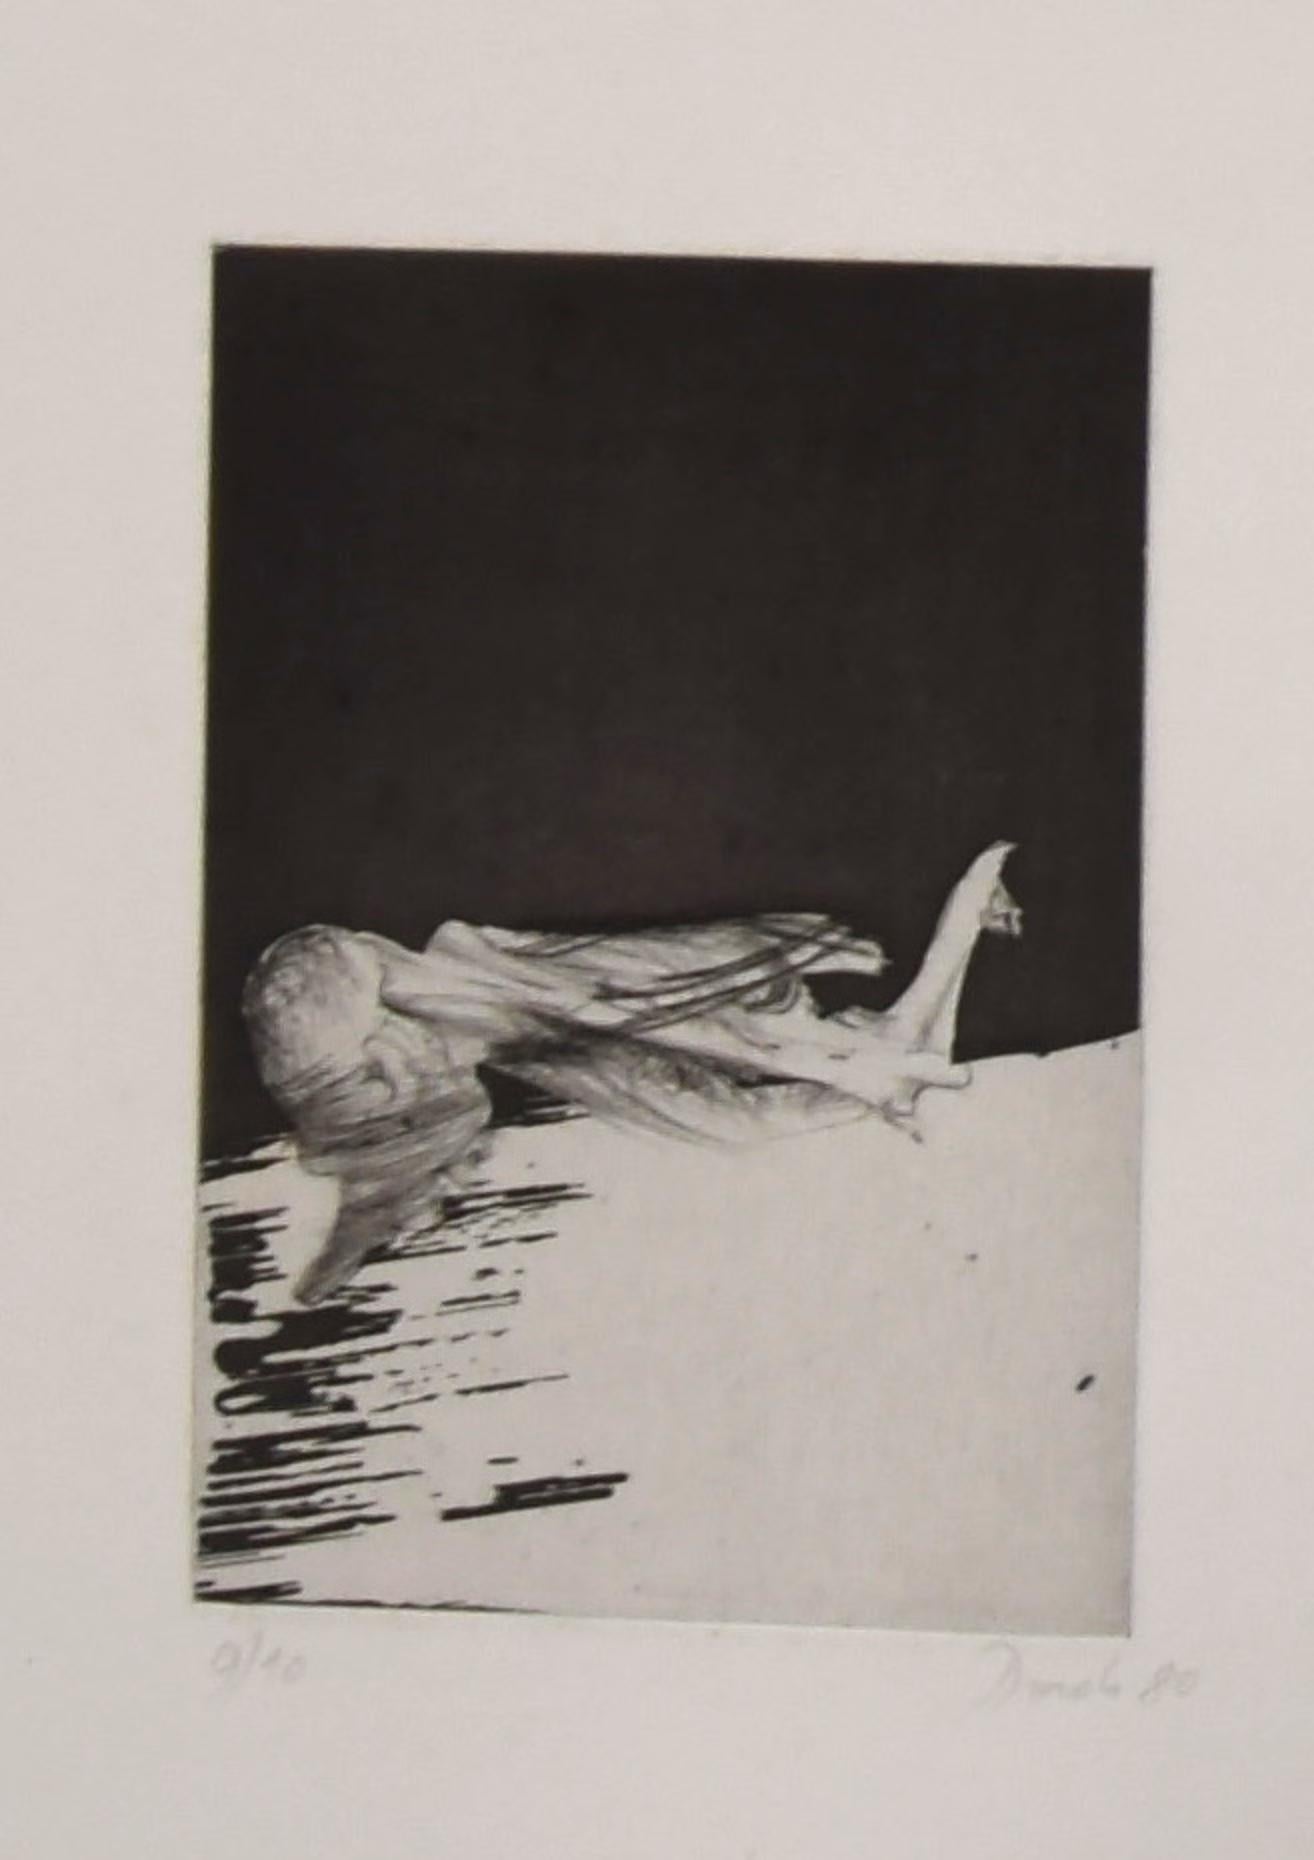 Dado (Miodrag Djuric) Abstract Print - Composition - Original Etching by Miodrag Djuric - 1980s